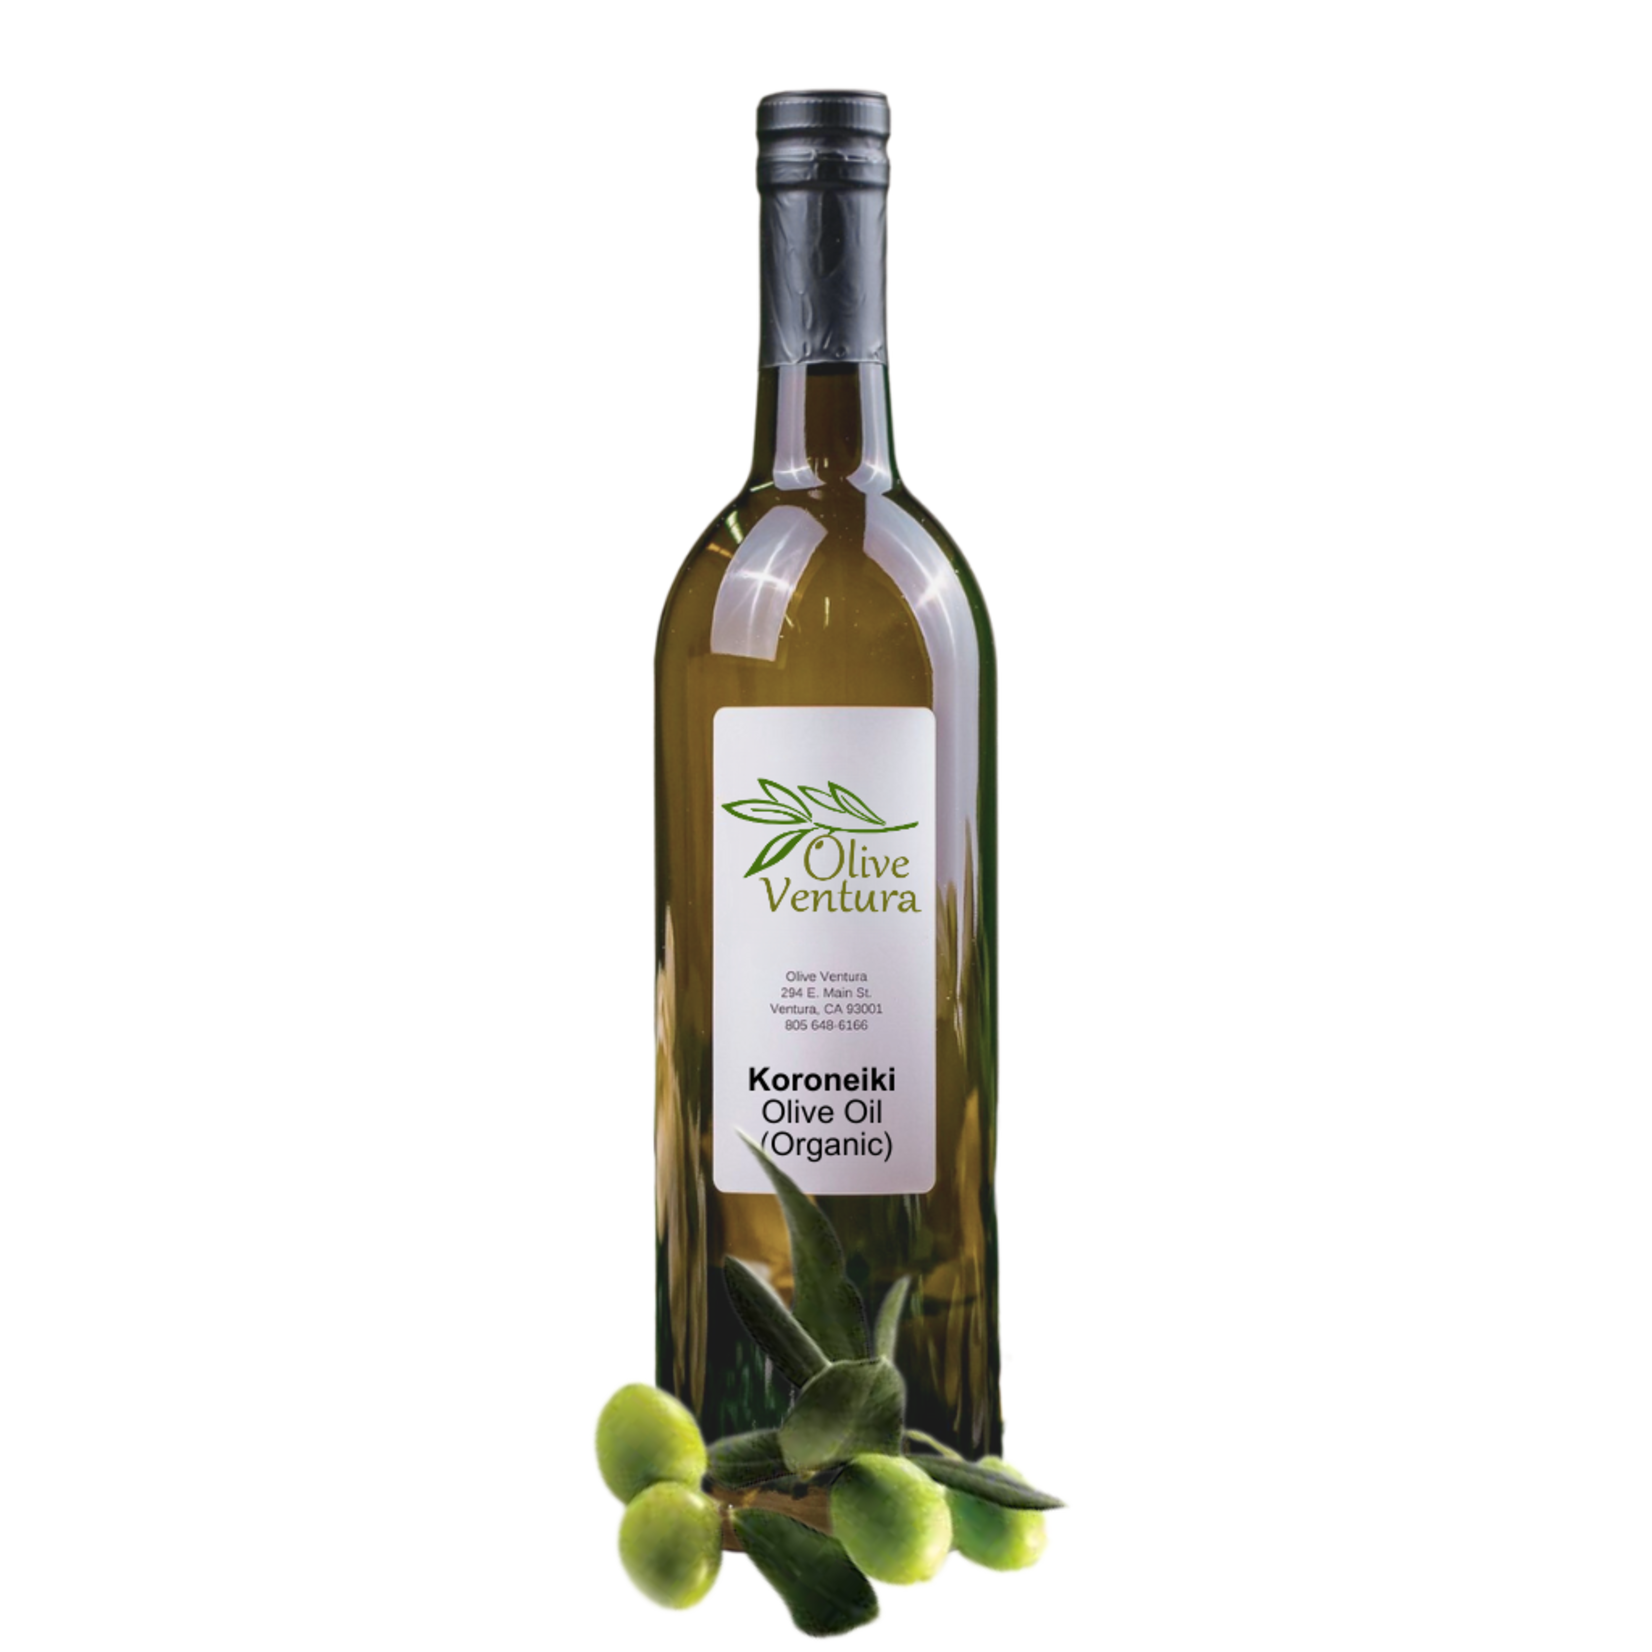 Koroneiki Olive Oil (Organic)